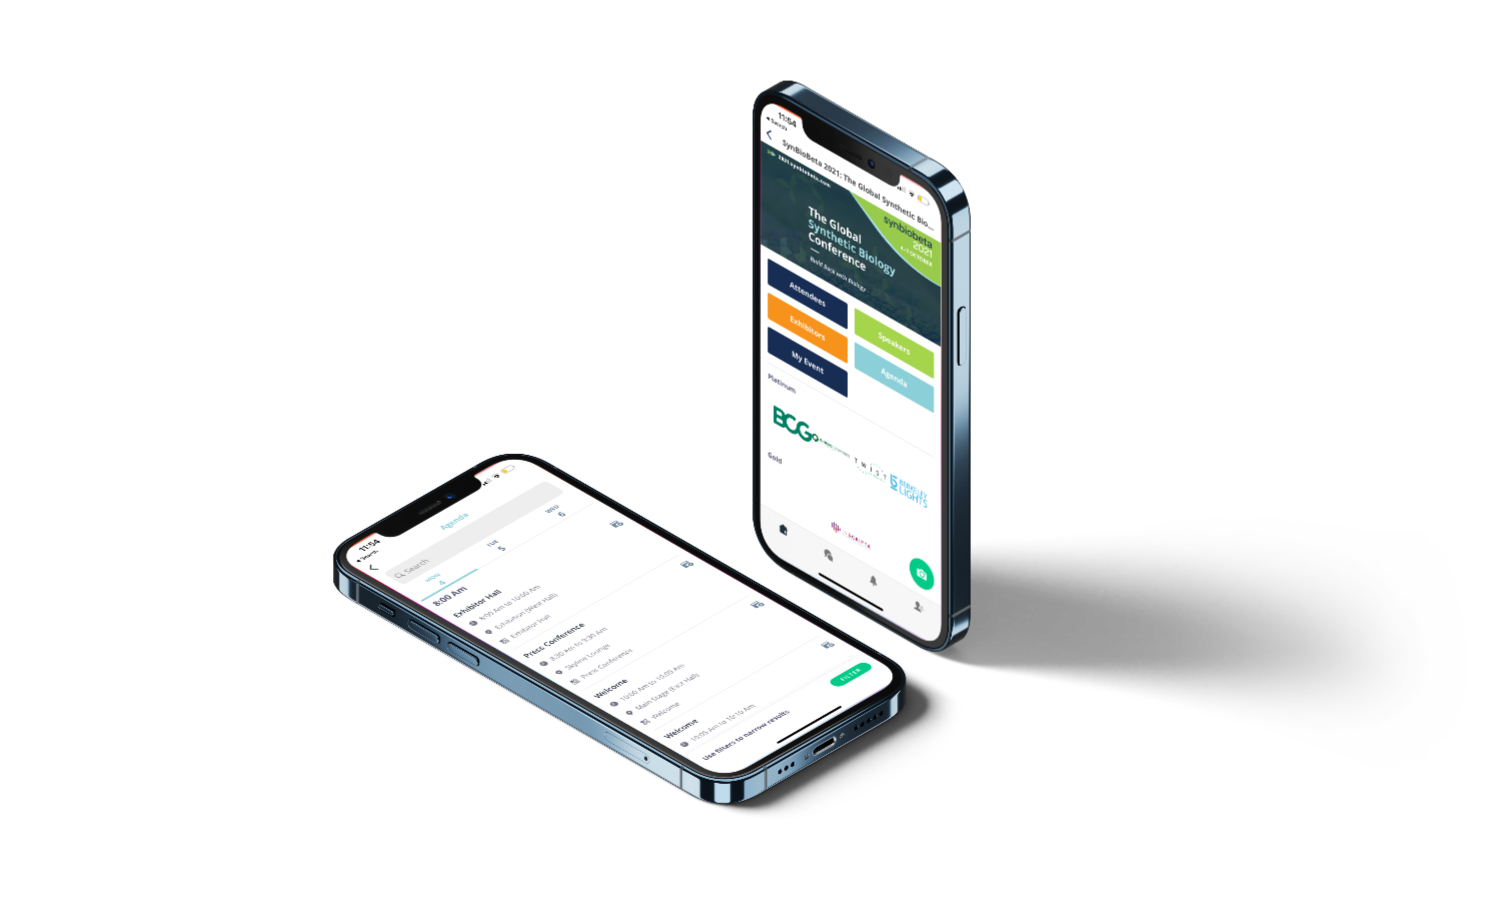 The SynBioBeta app on a smartphone